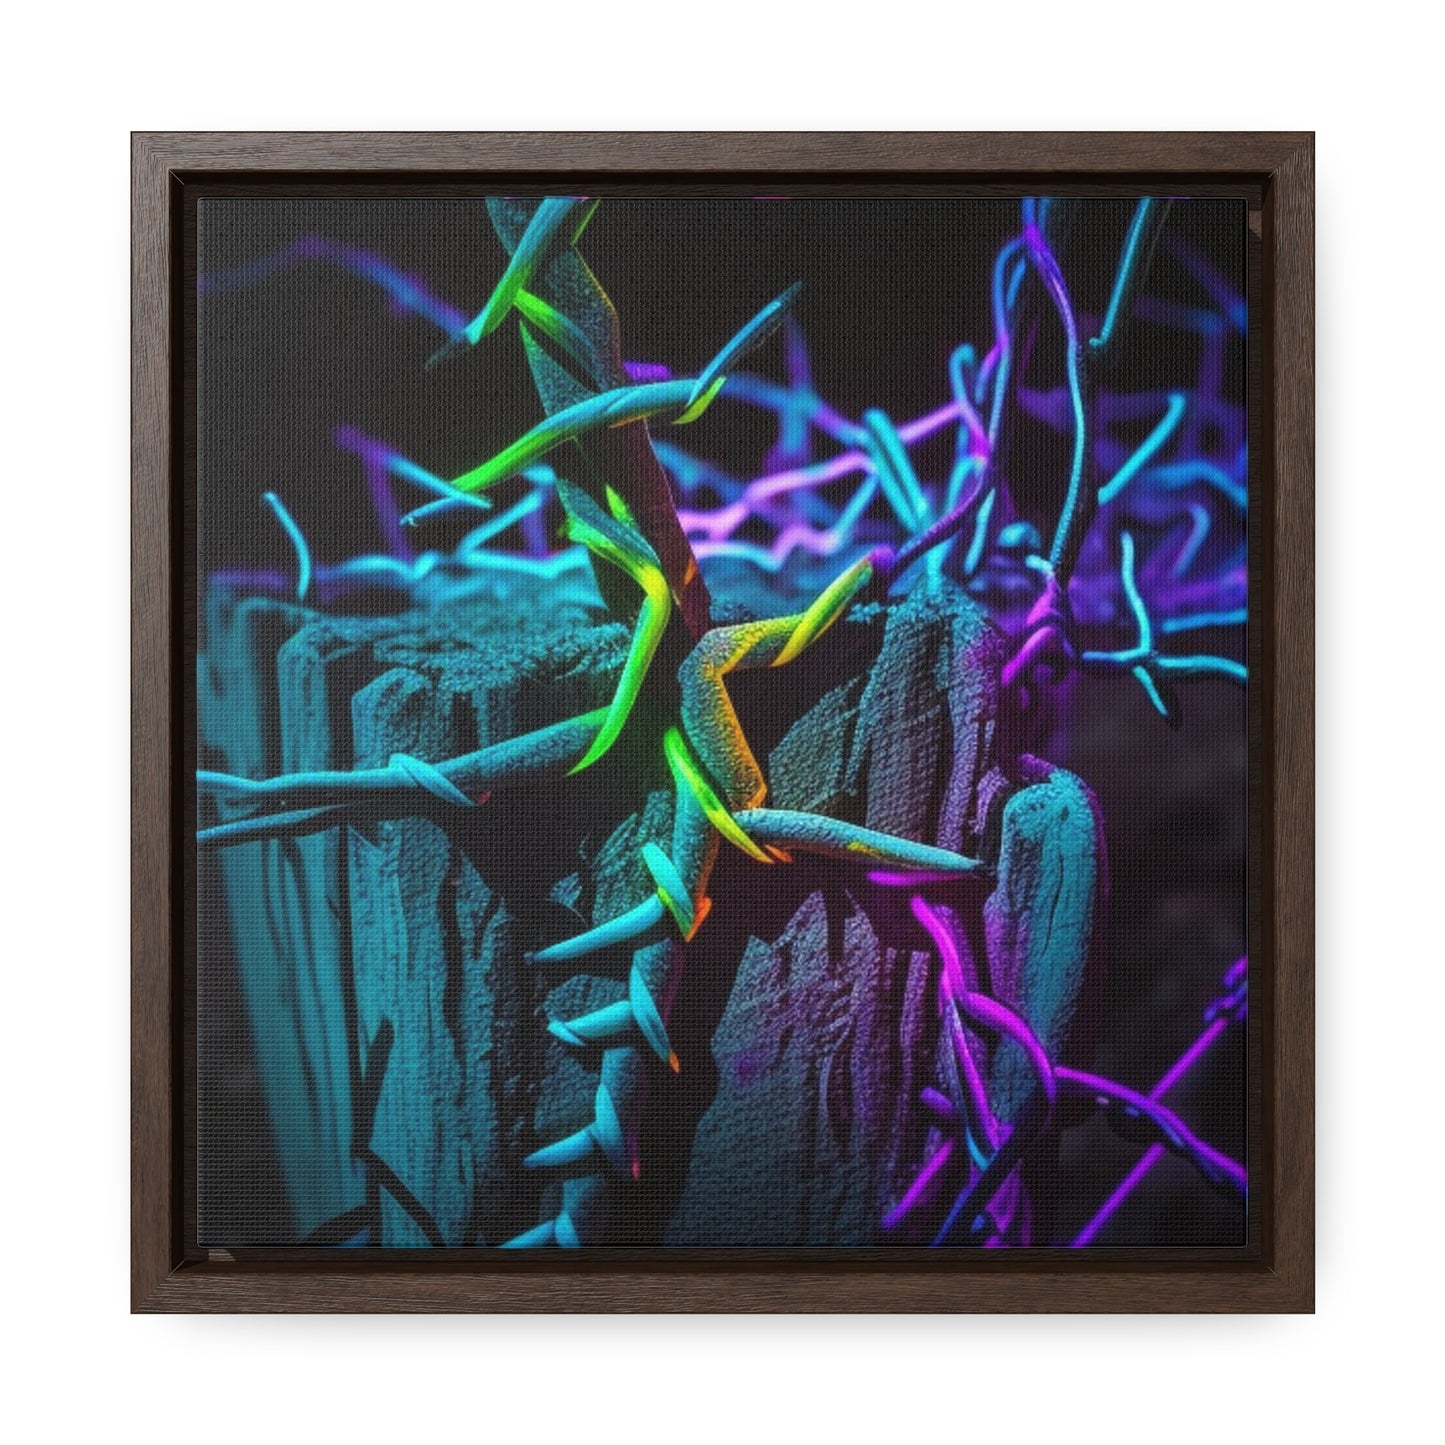 Gallery Canvas Wraps, Square Frame Macro Neon Barbs 3